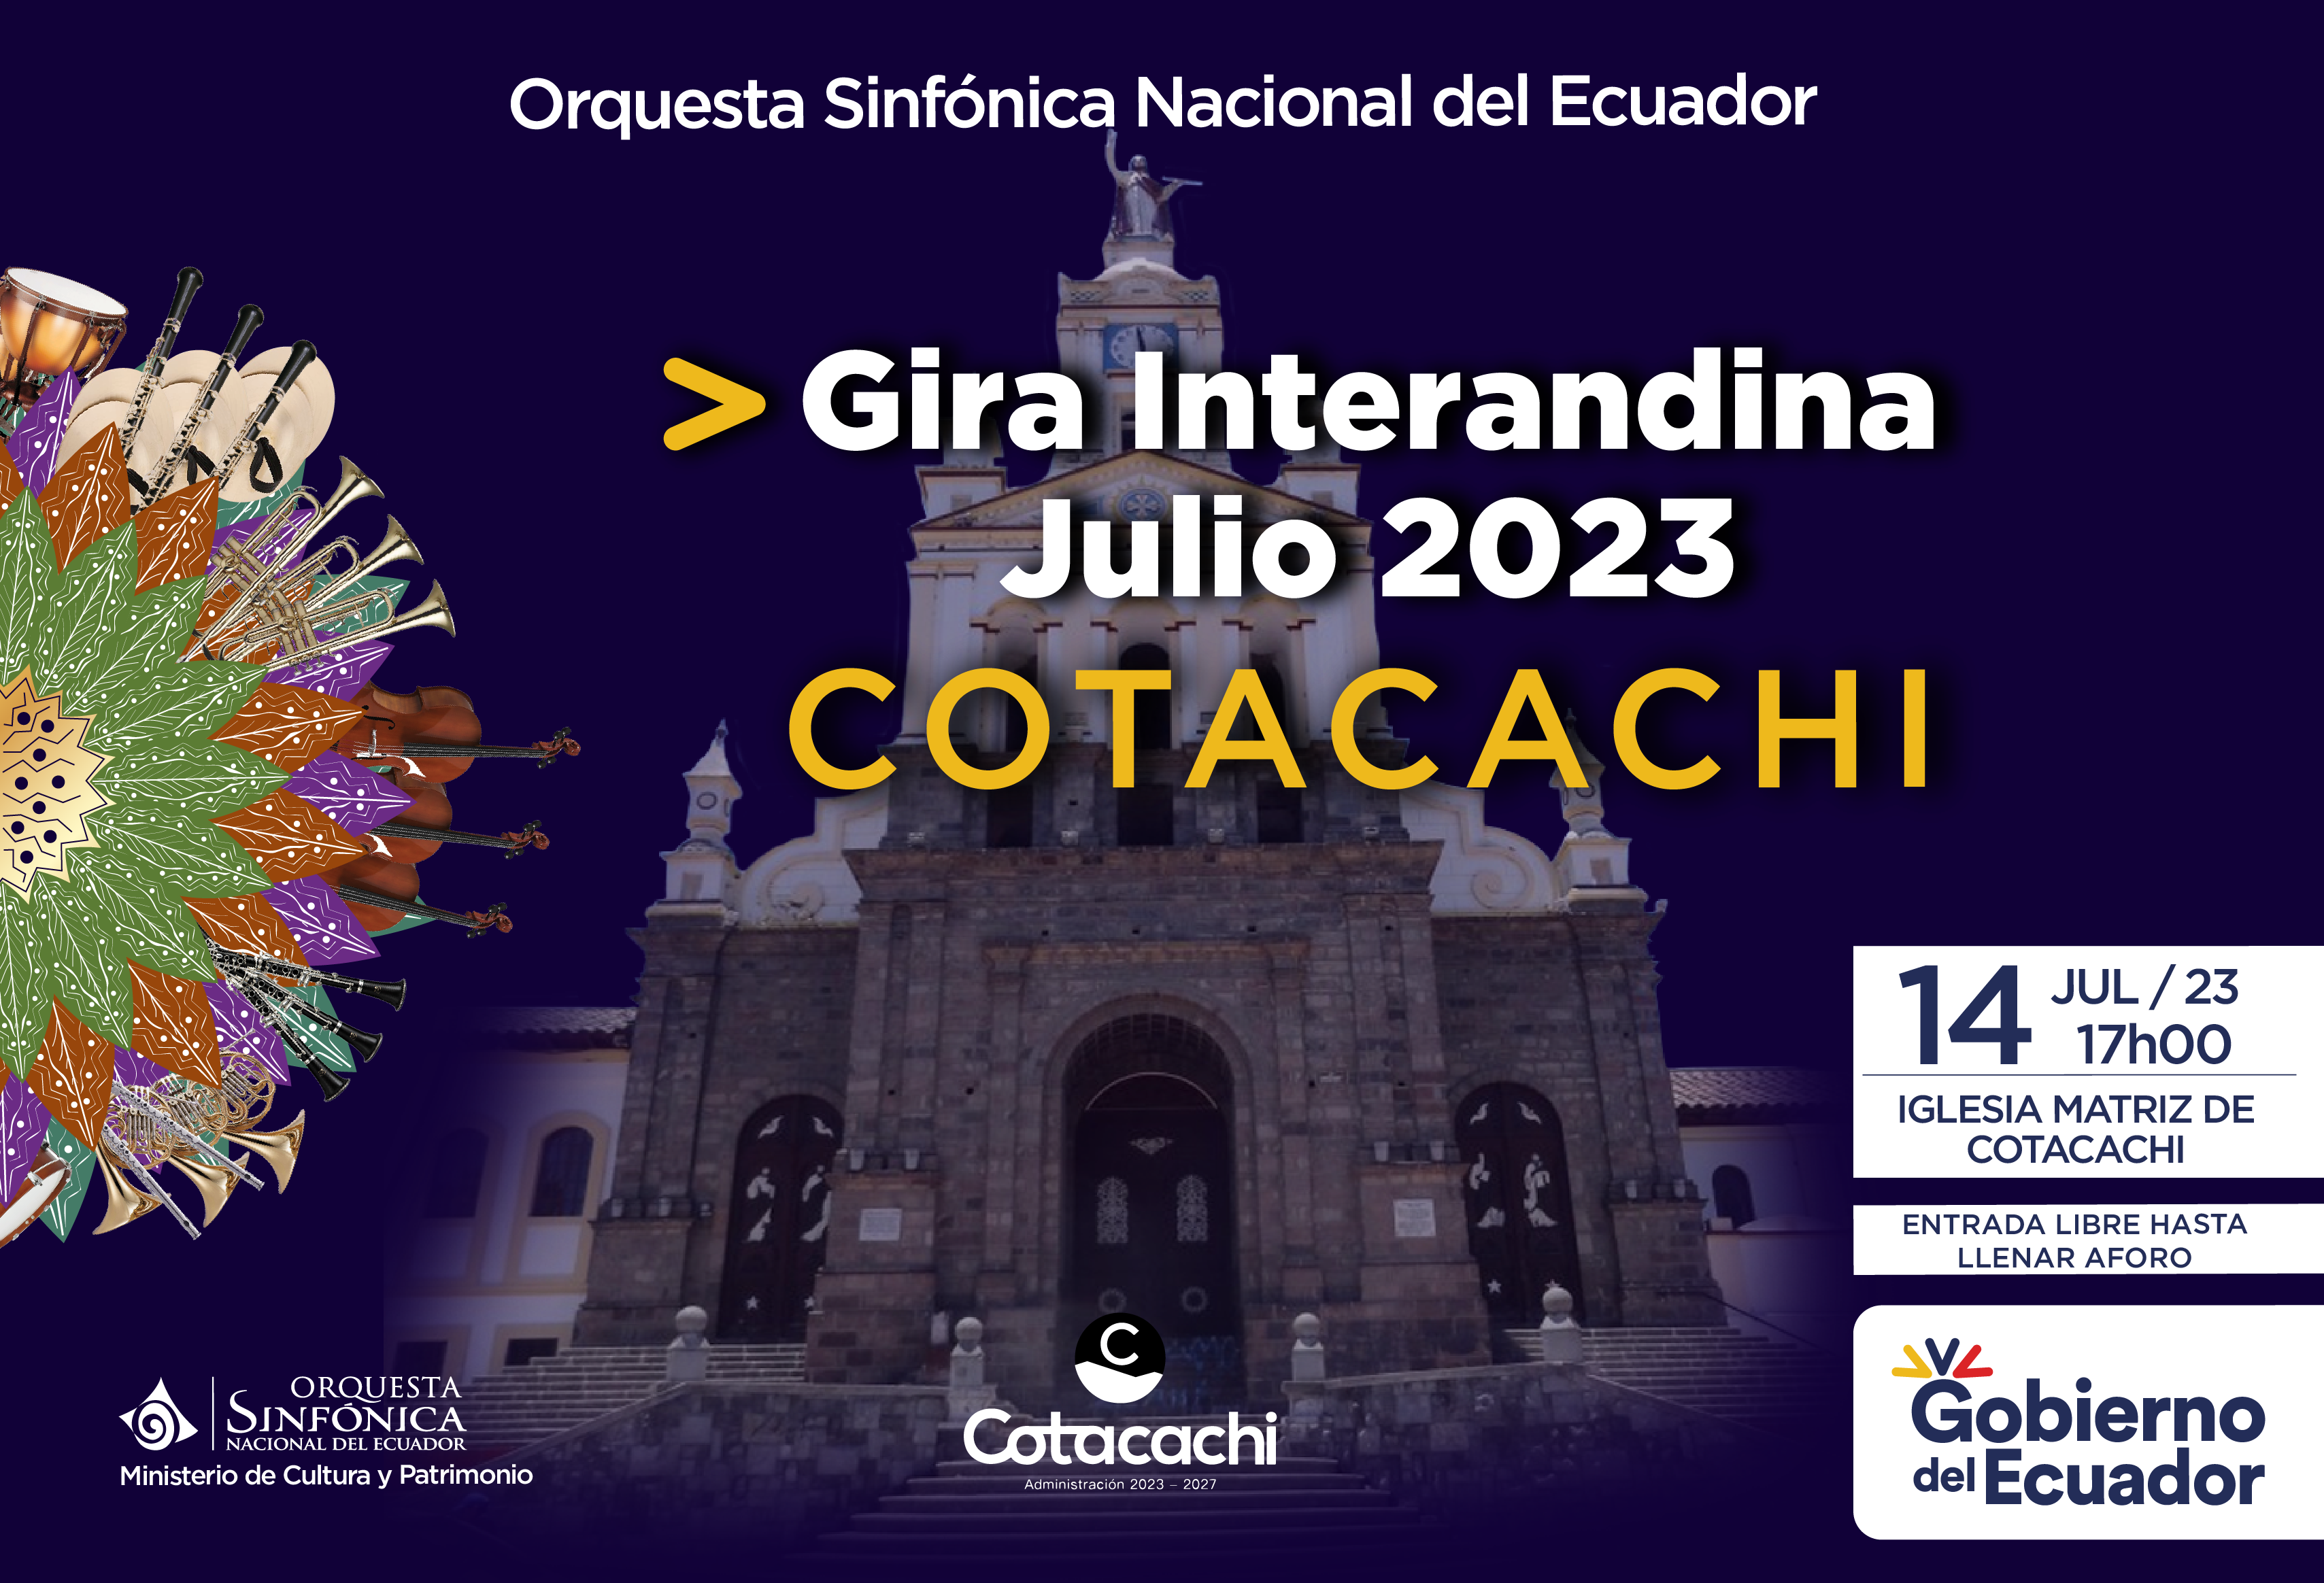 Gira Interandina Julio 2023 - Cotacachi